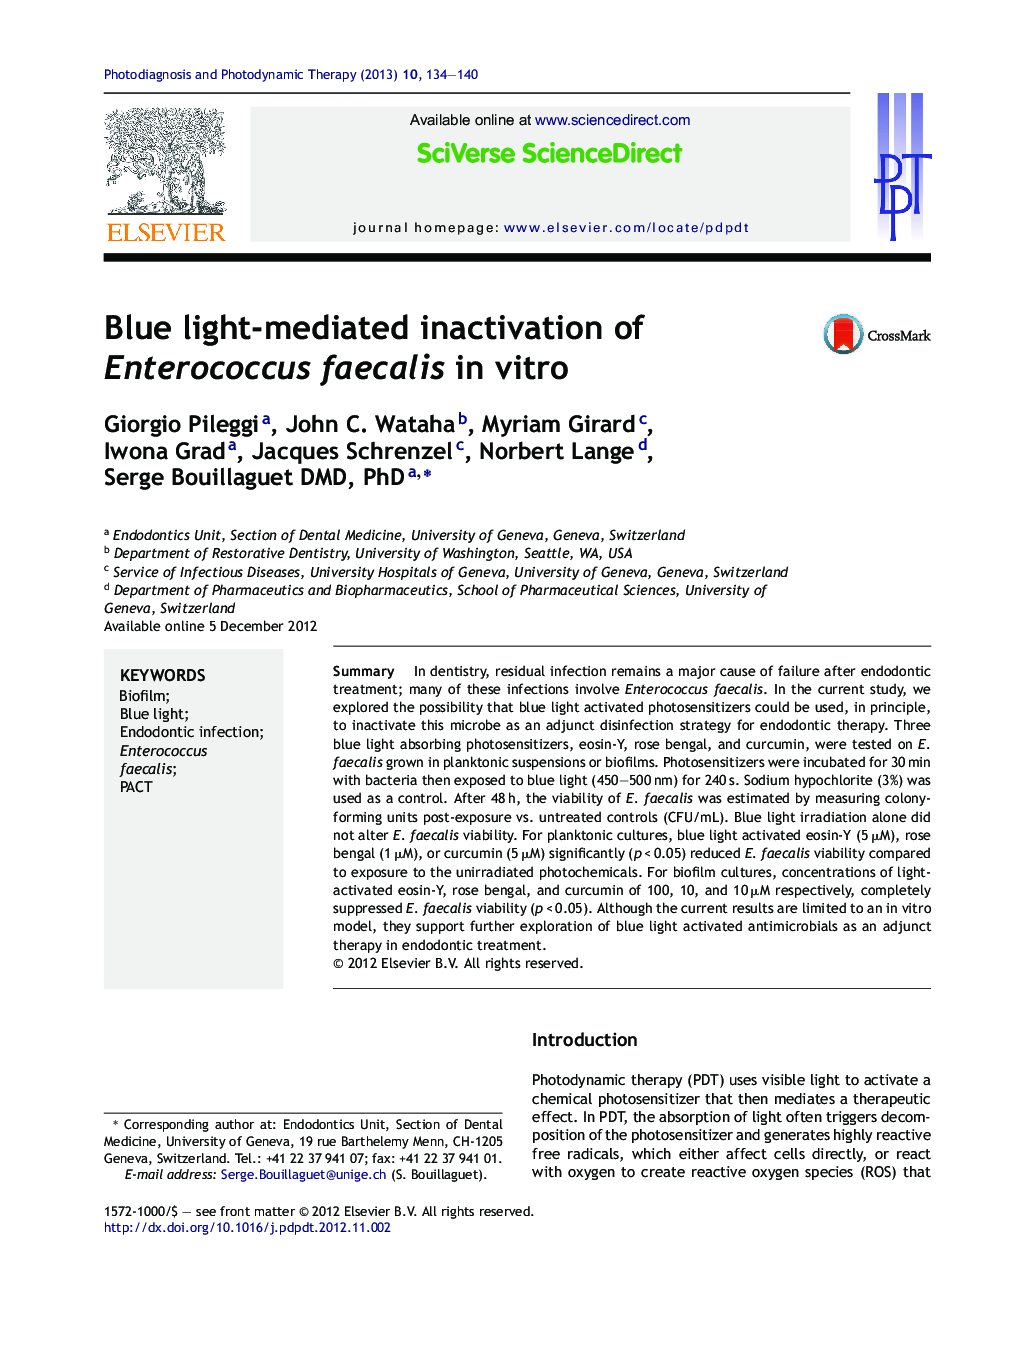 Blue light-mediated inactivation of Enterococcus faecalis in vitro